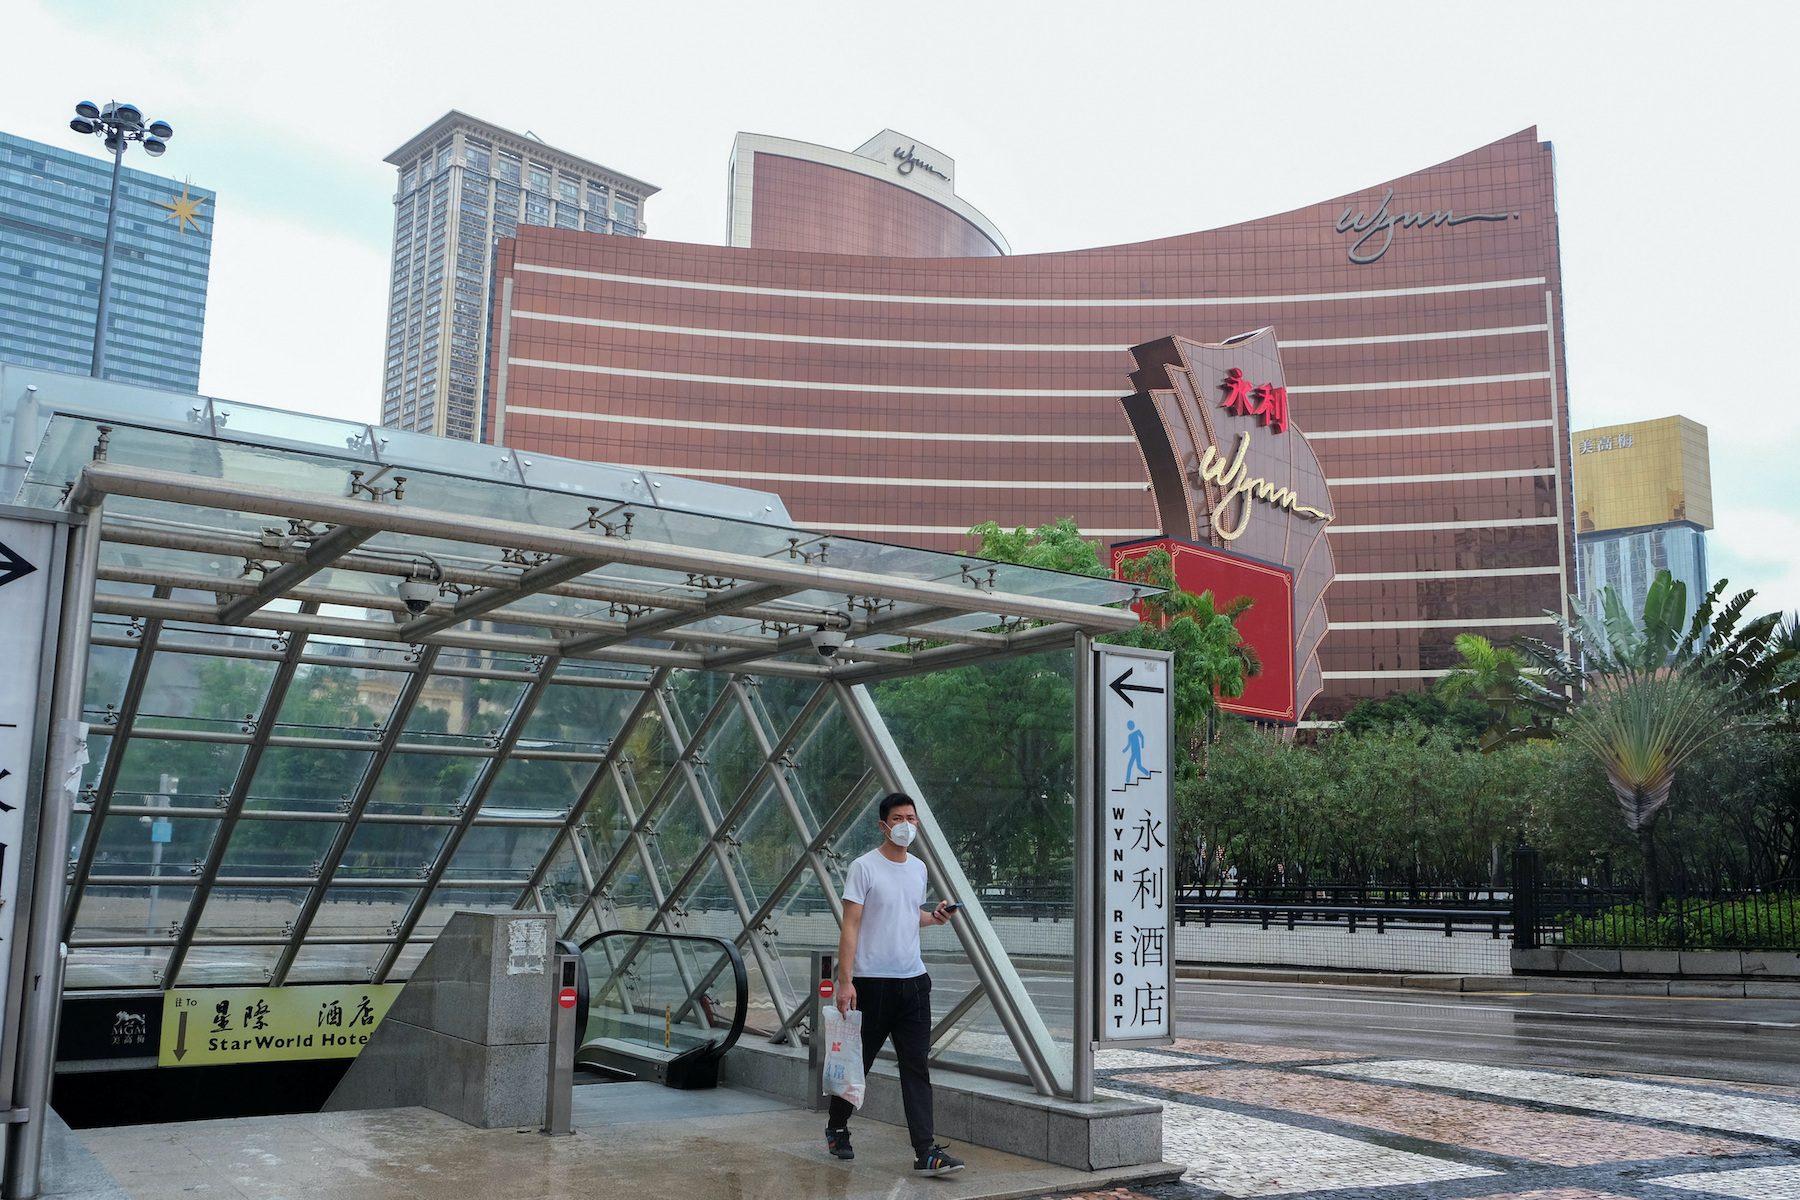 Wynn Macau names Linda Chen president ahead of new licensing bids